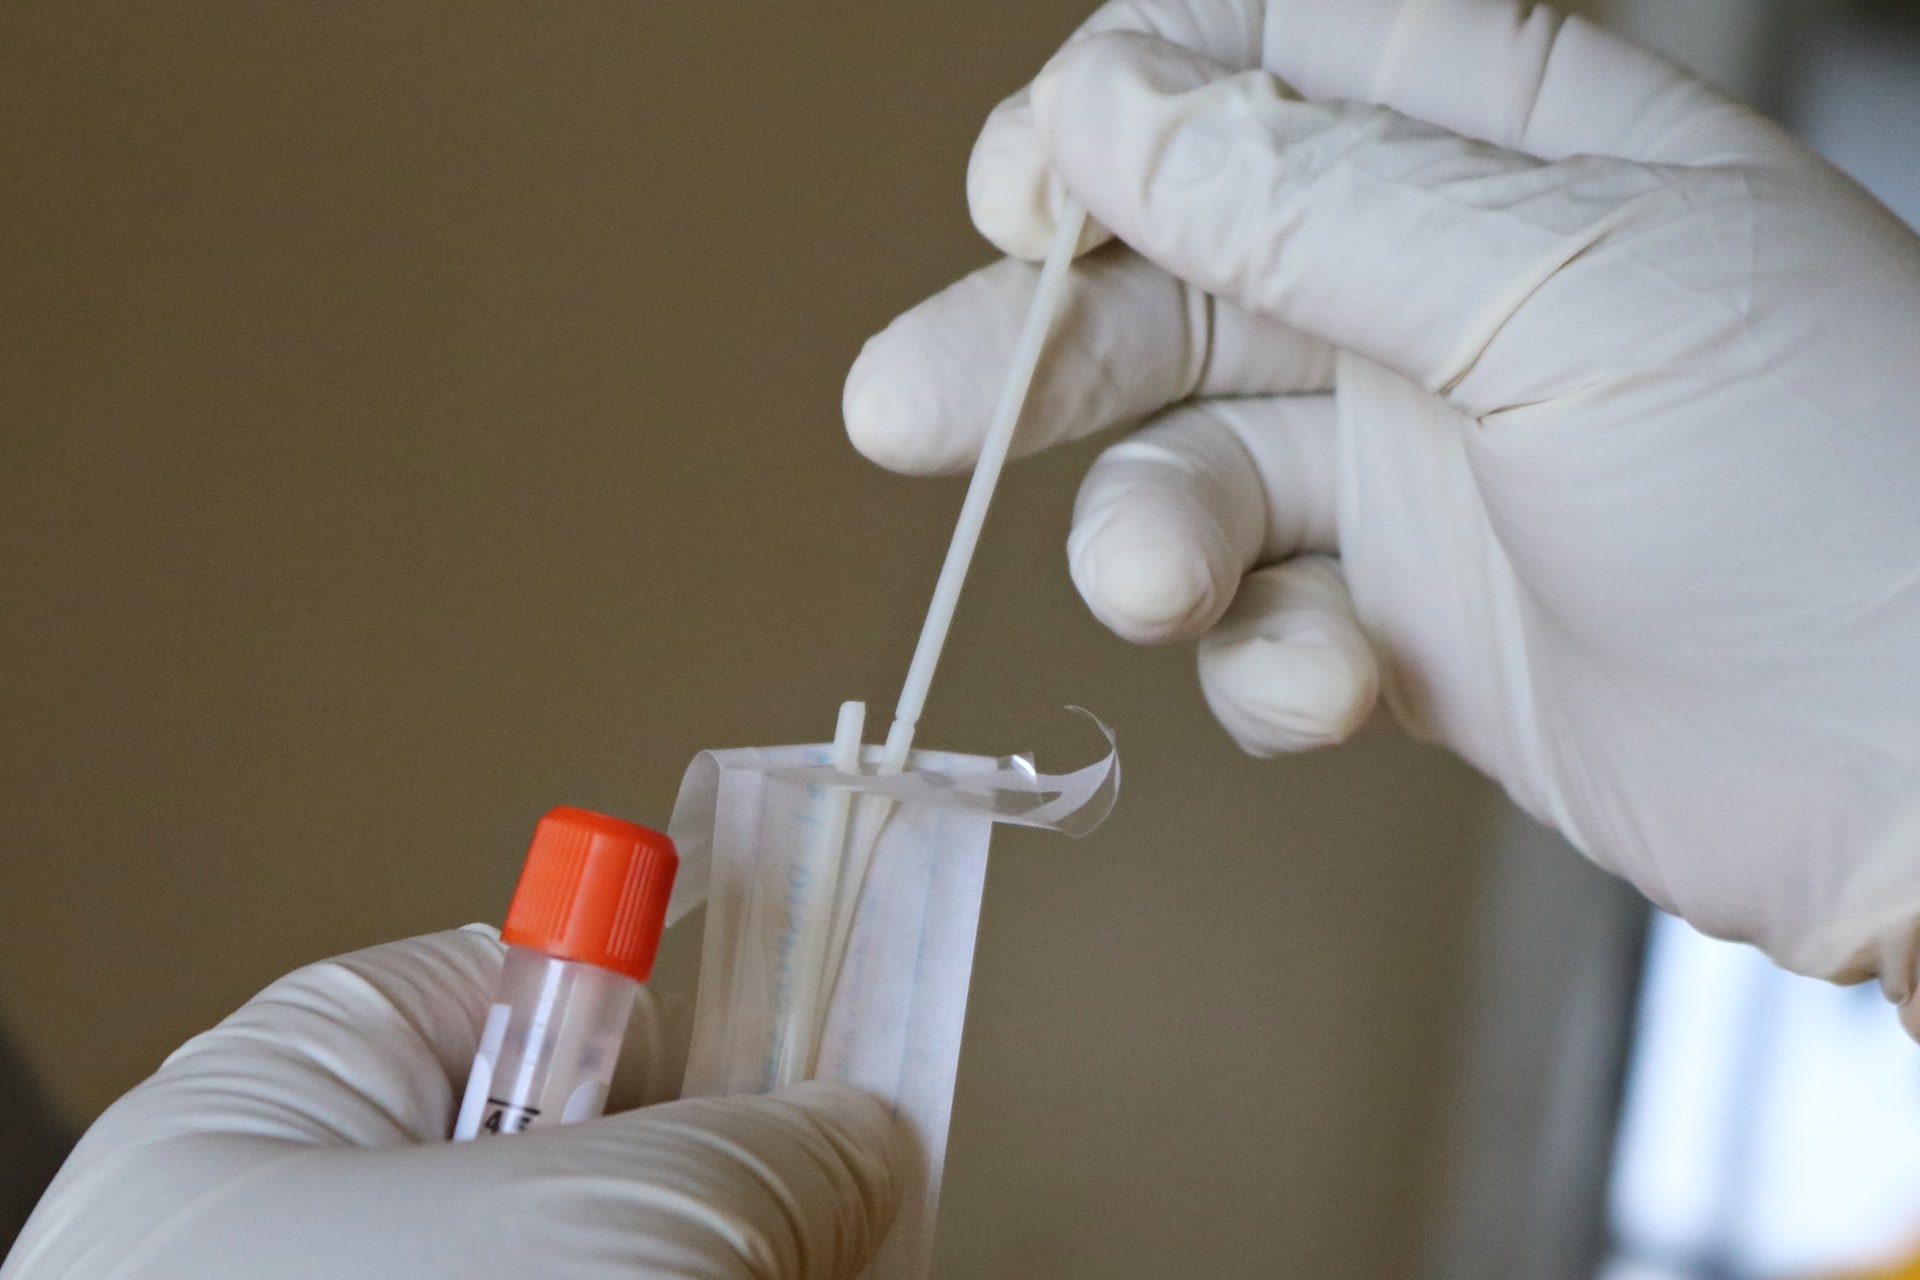 Can we improve coronavirus testing? – Expert Q&A